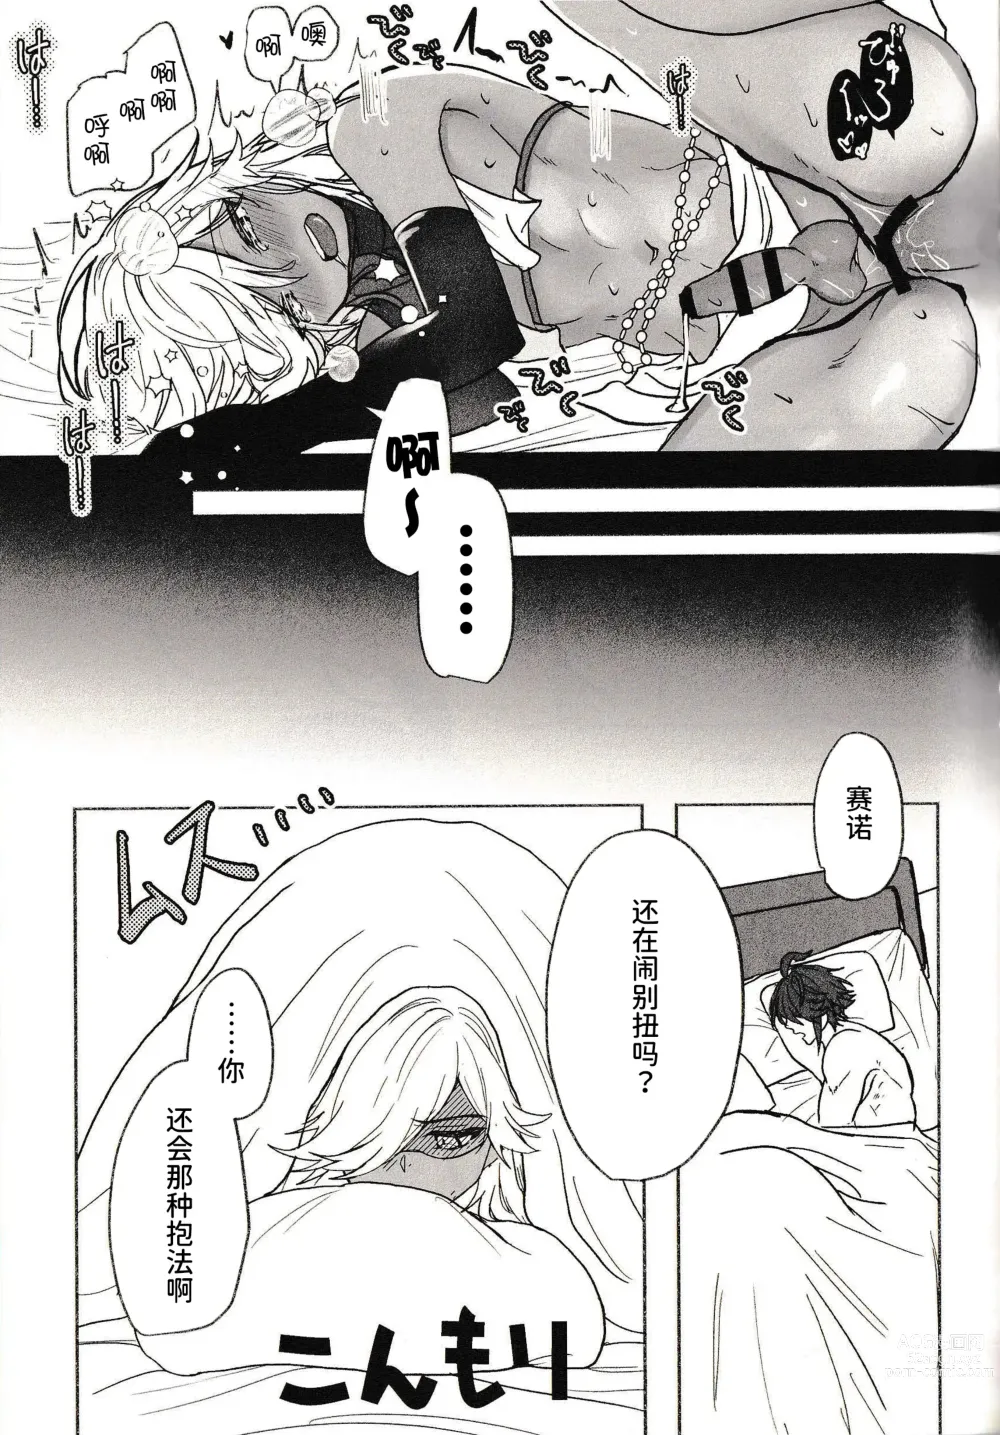 Page 37 of doujinshi Gokko Asobi